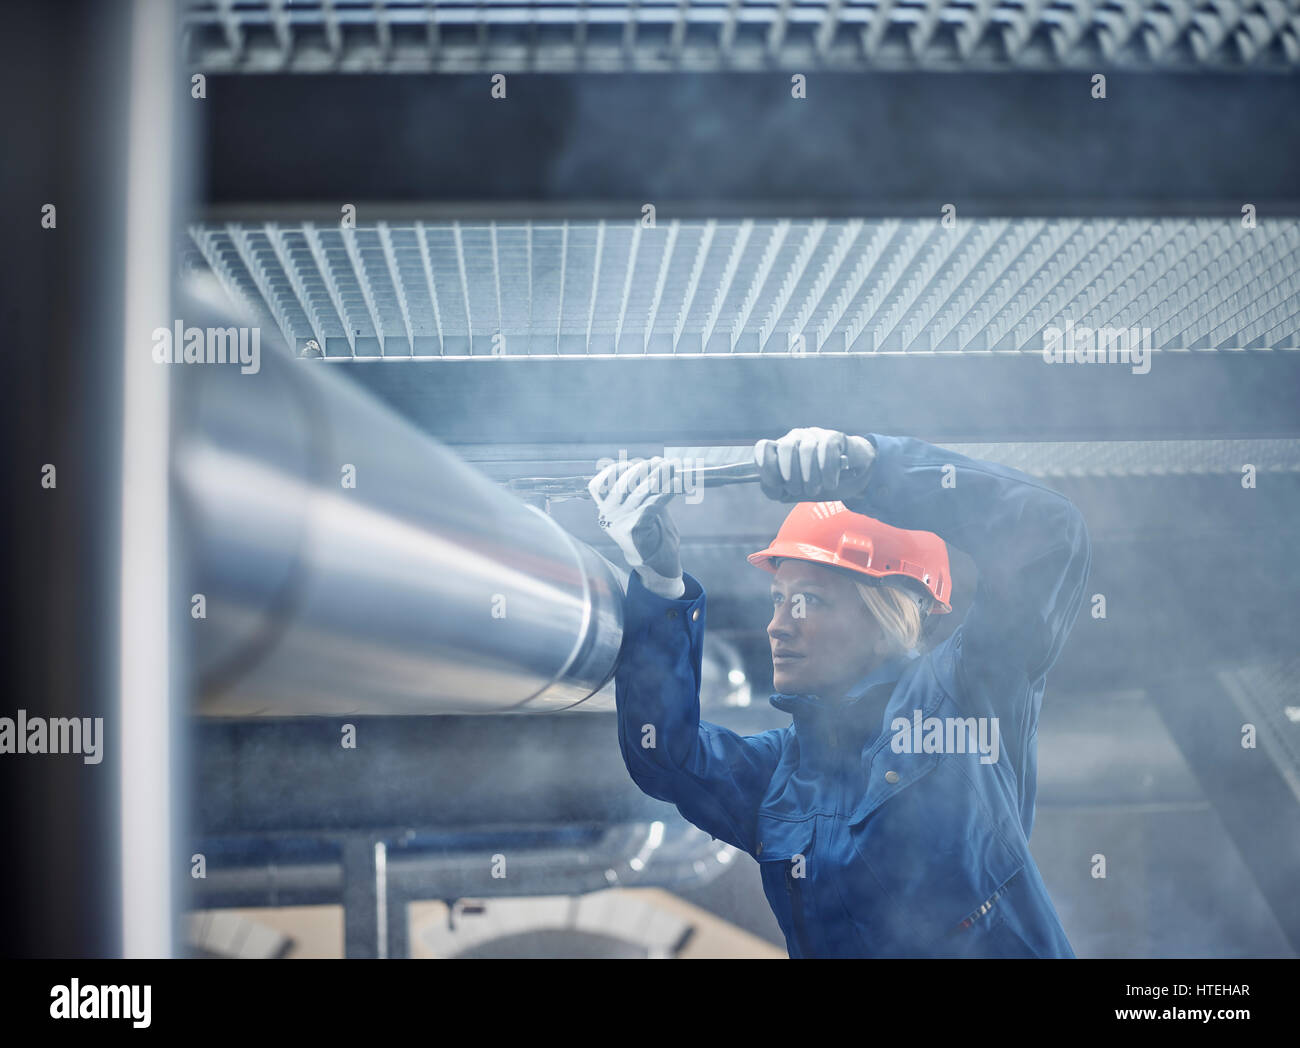 Technician, mechanic with orange helmet mounting a refrigeration line bracket, Austria Stock Photo